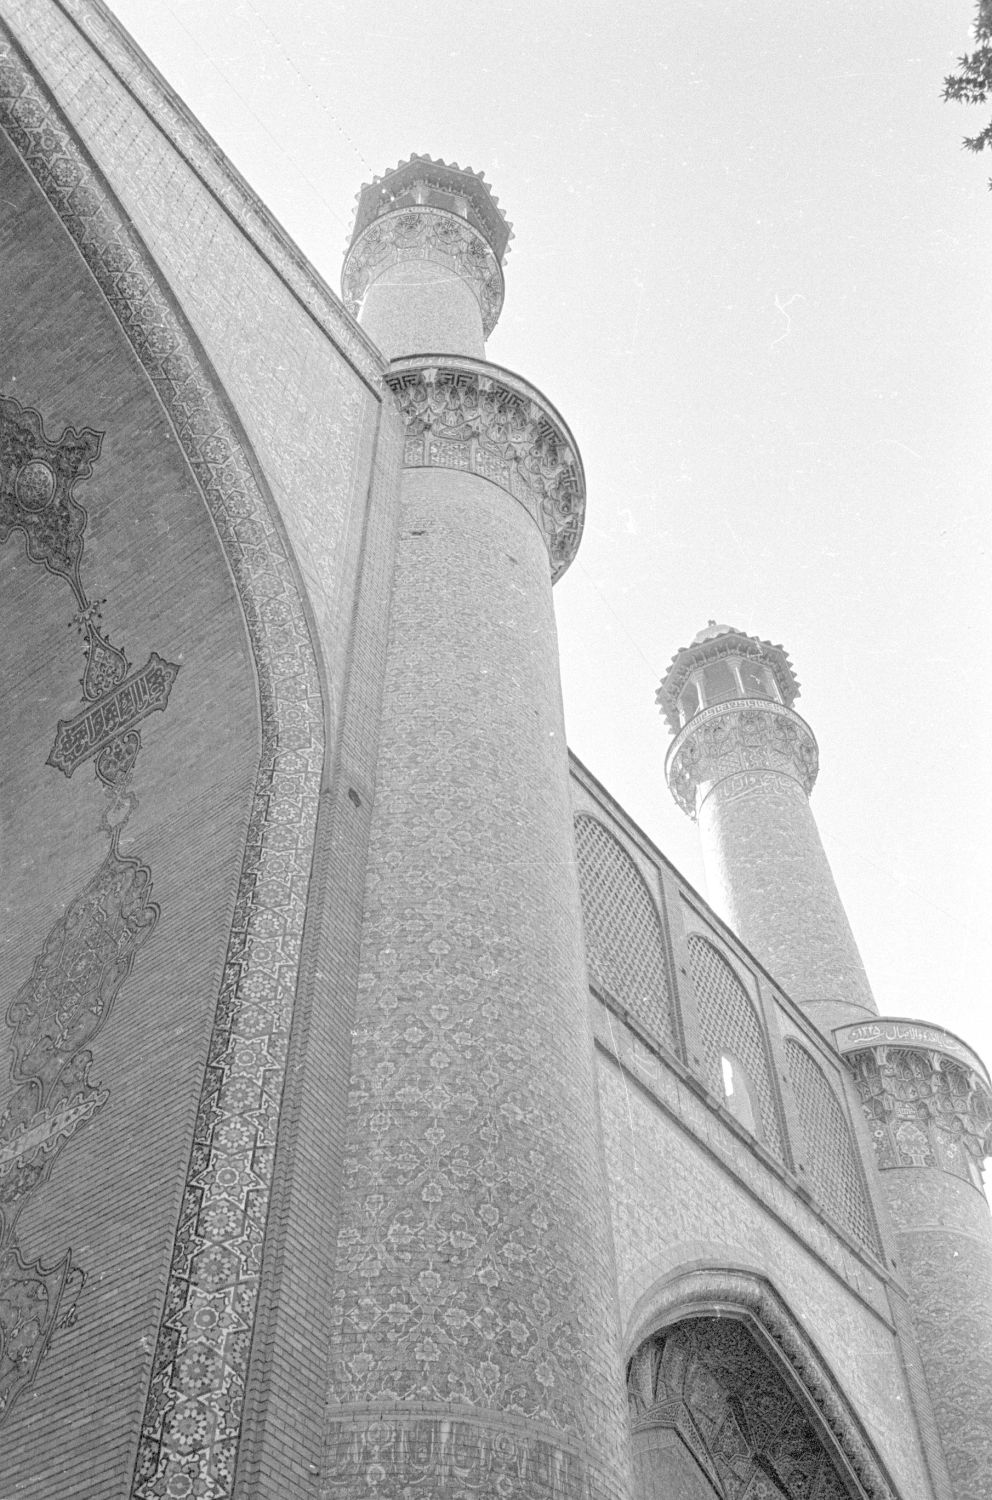 Qibla iwan (southwest iwan): view from base of engaged minaret tower looking upward.